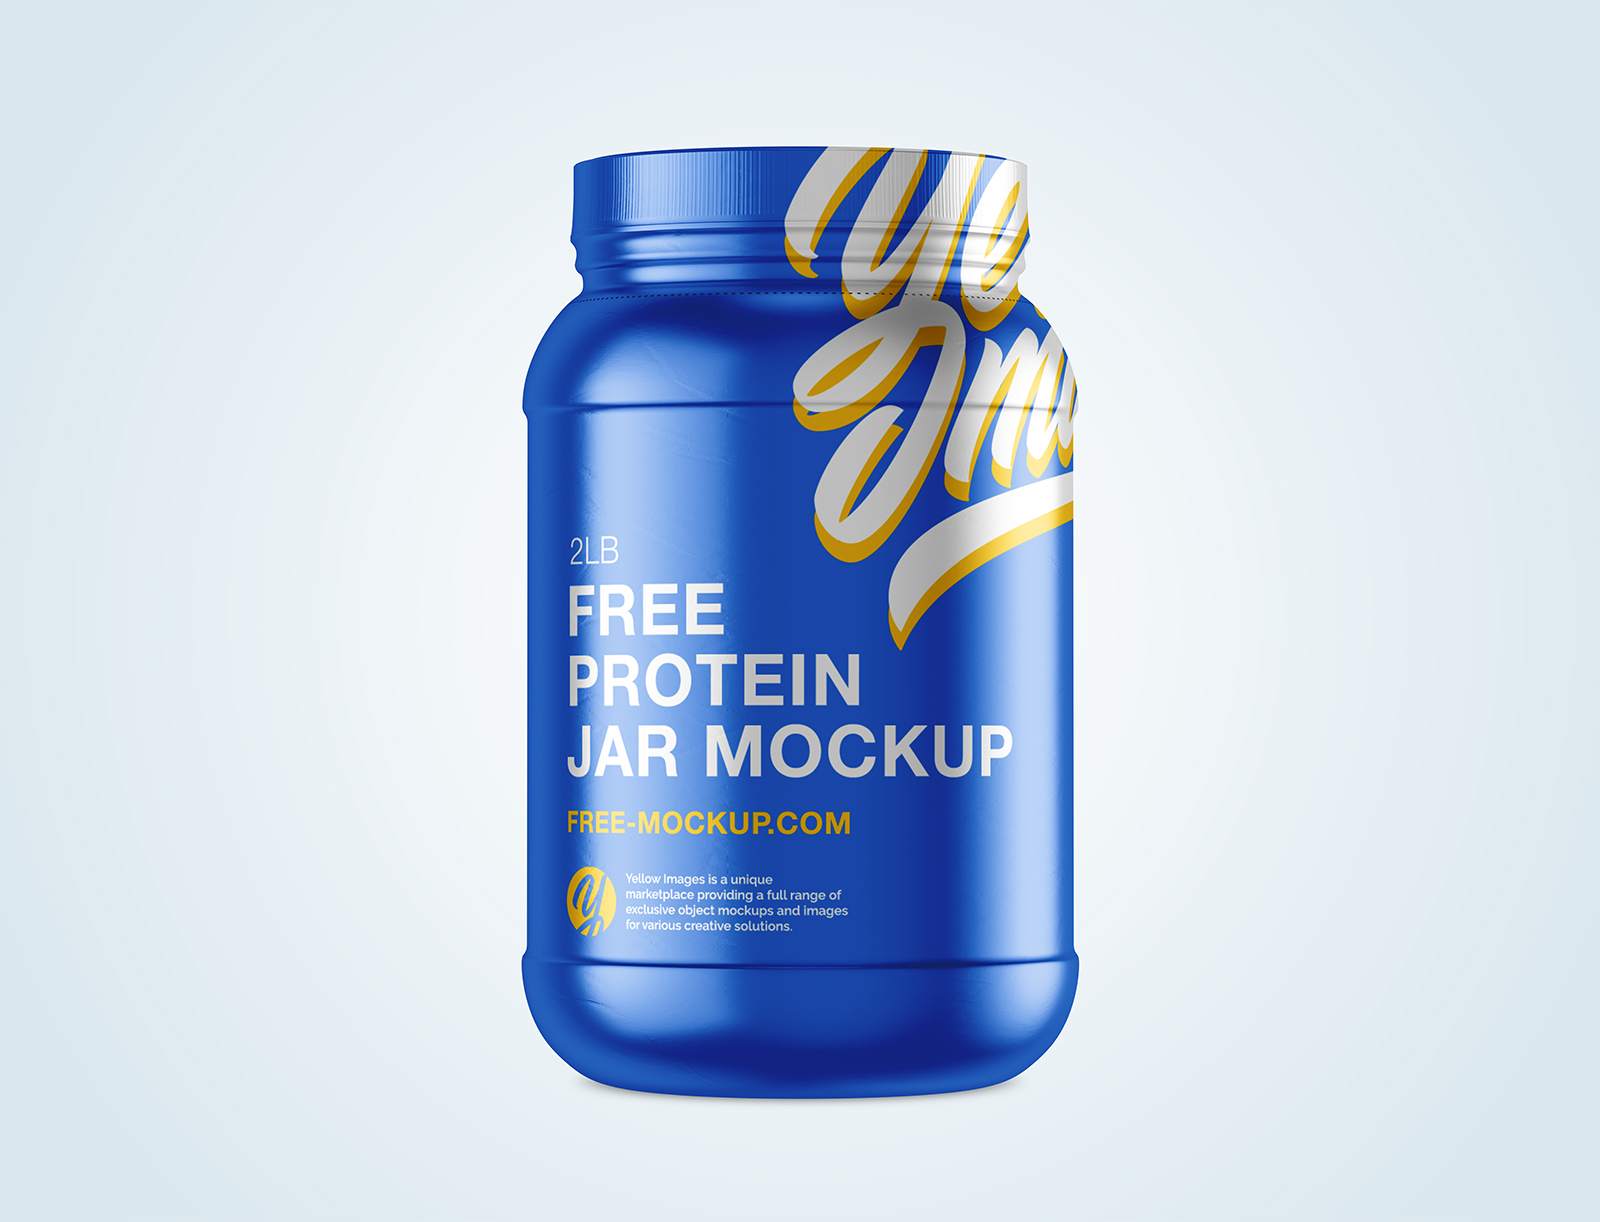 Download Free Protein Jar Mockup 2lb | Free Mockup